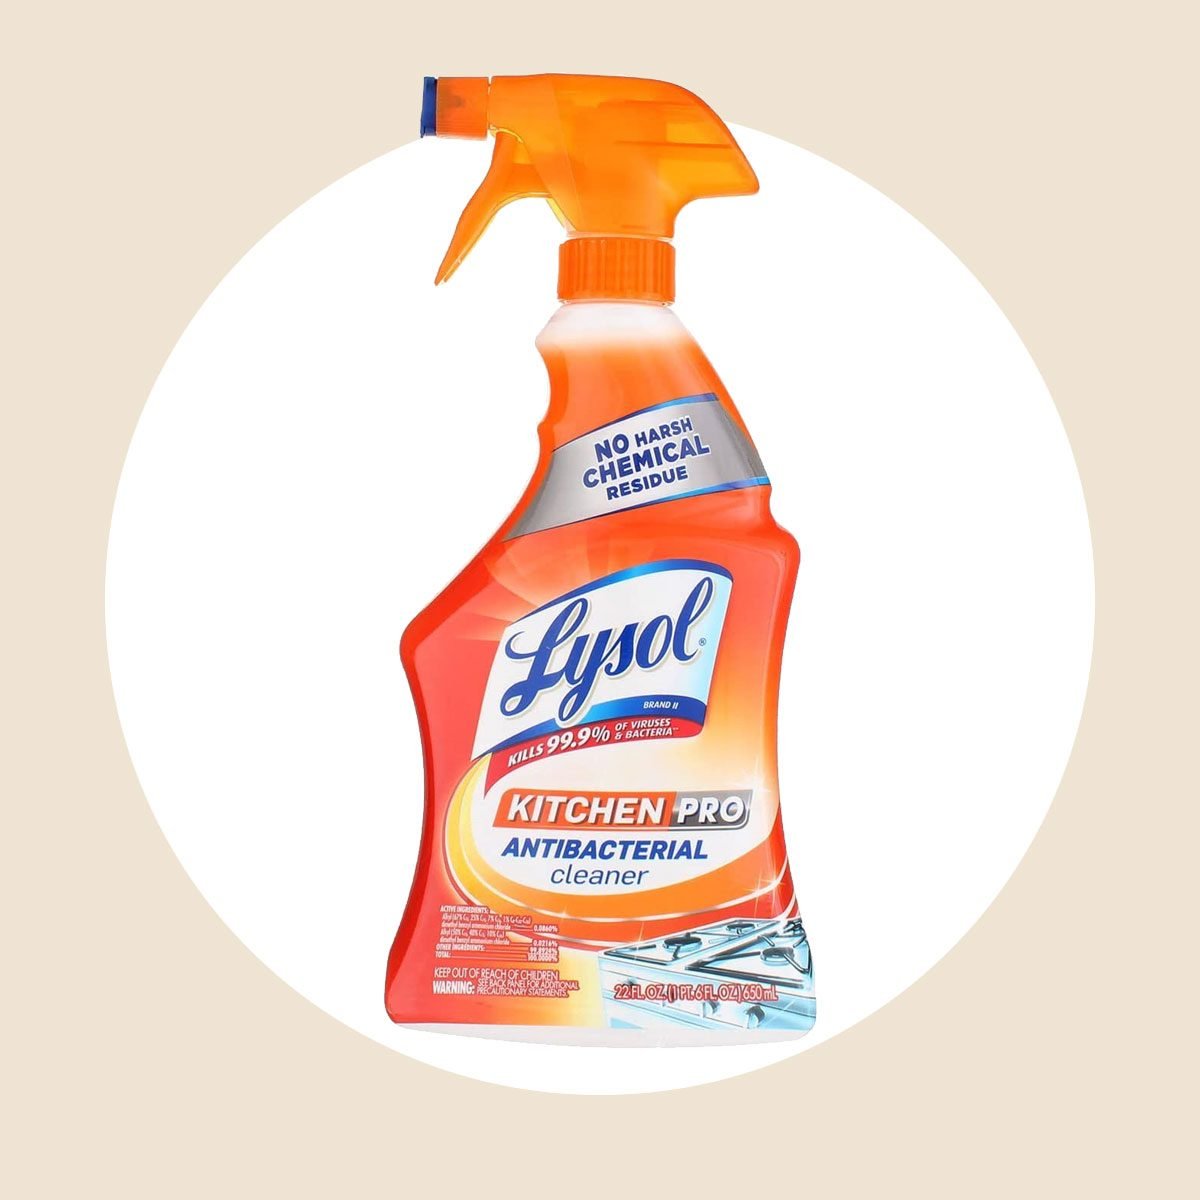 Lysol Kitchen Pro Cleaner Ecomm Via Amazon 